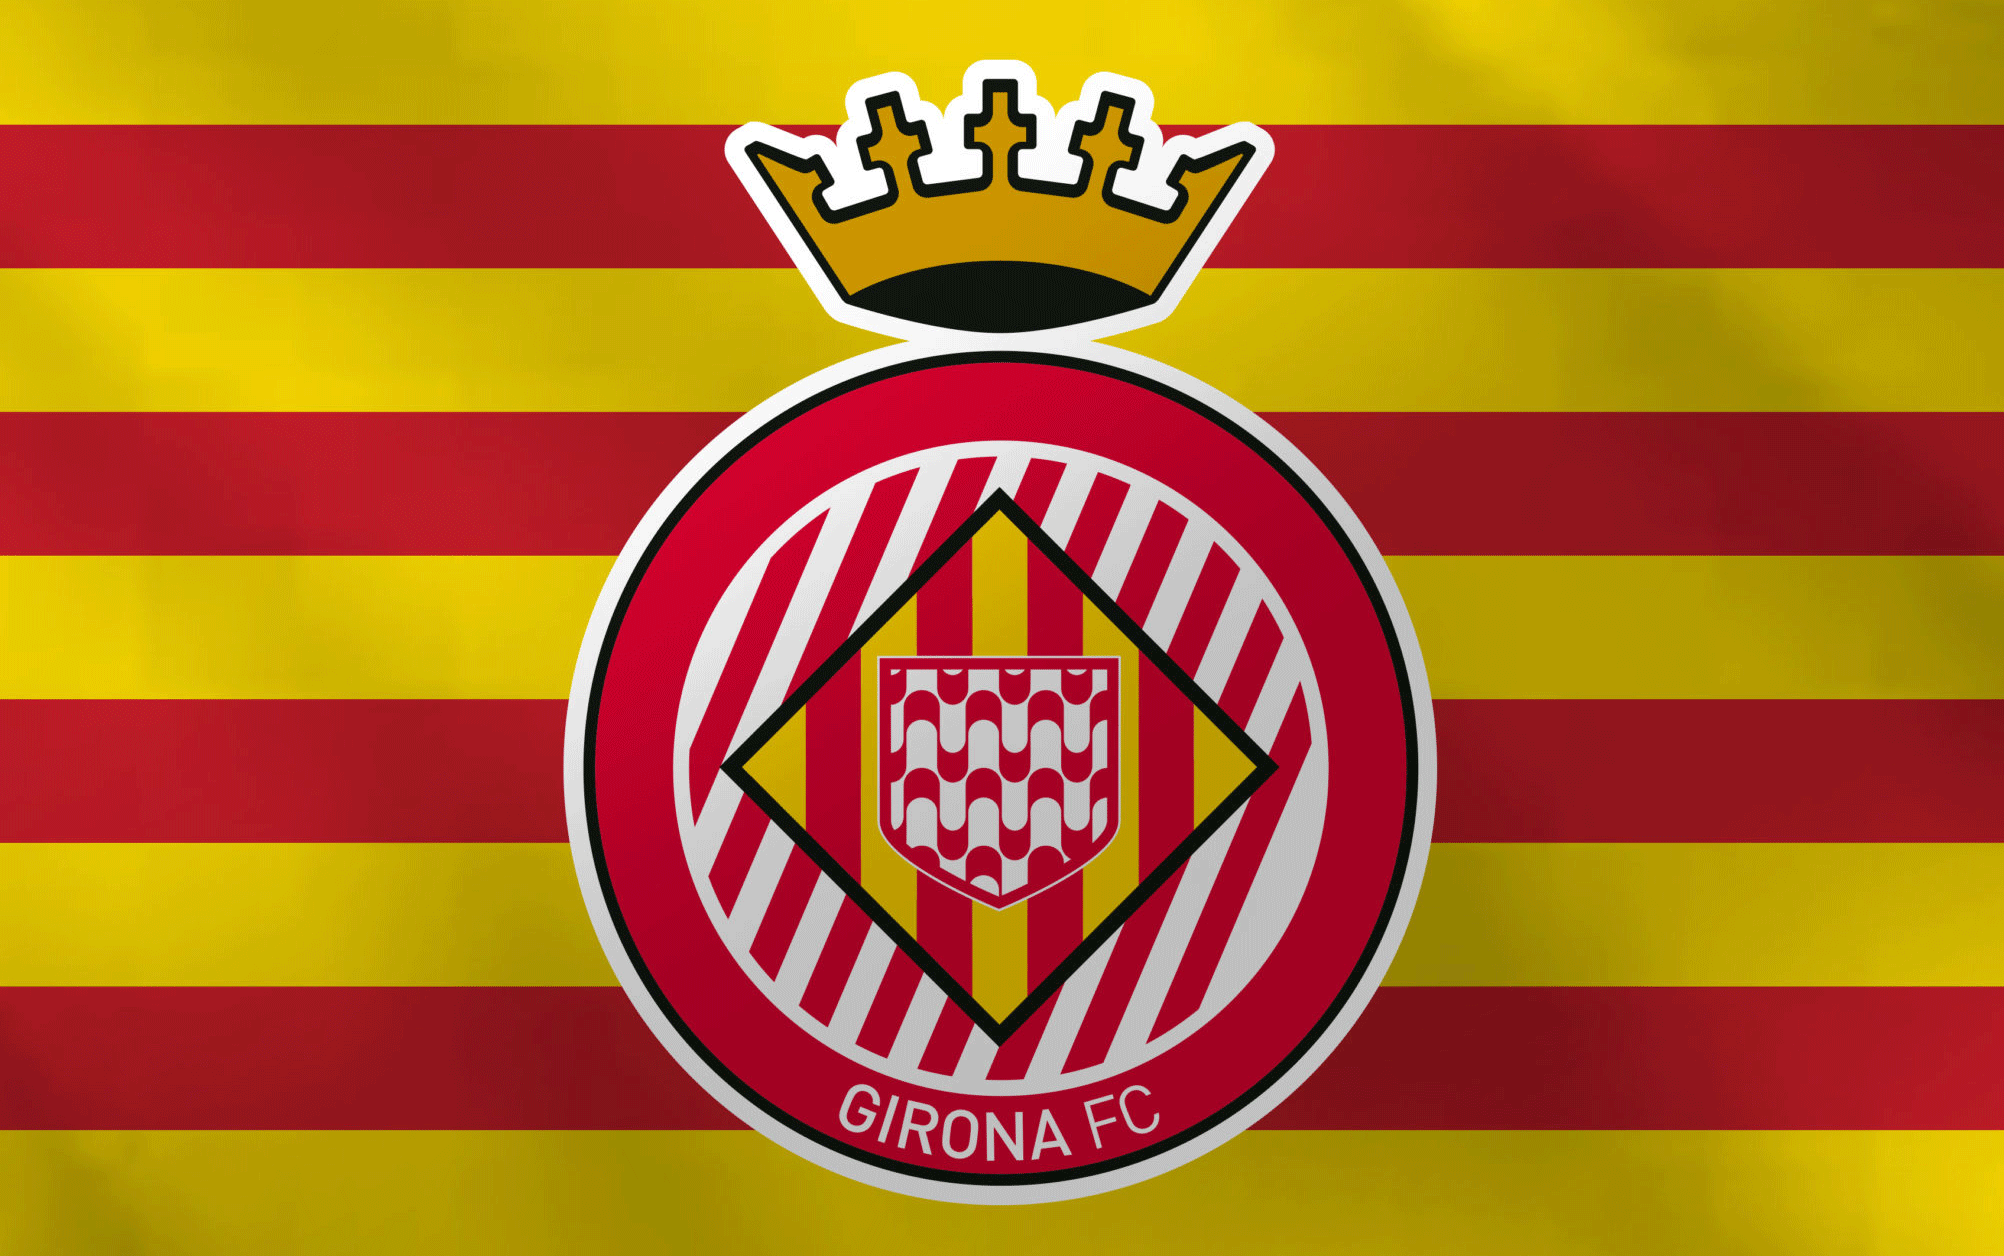 Girona Squad Players, Stadium, Kits, and much more